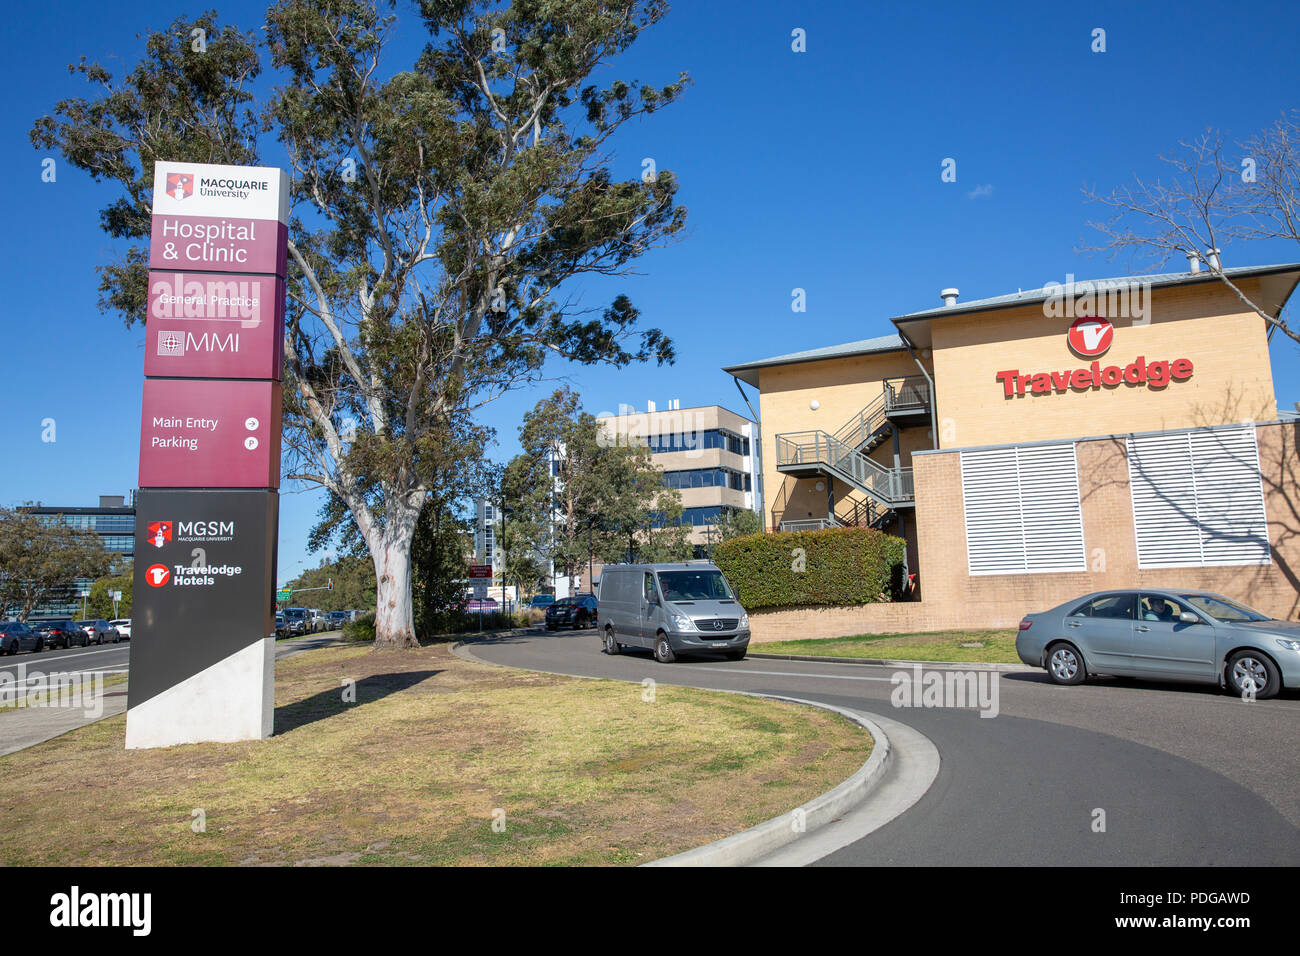 Travelodge Hotel e alloggi a Macquarie University Hospital, Macquarie Park,Sydney , Australia Foto Stock